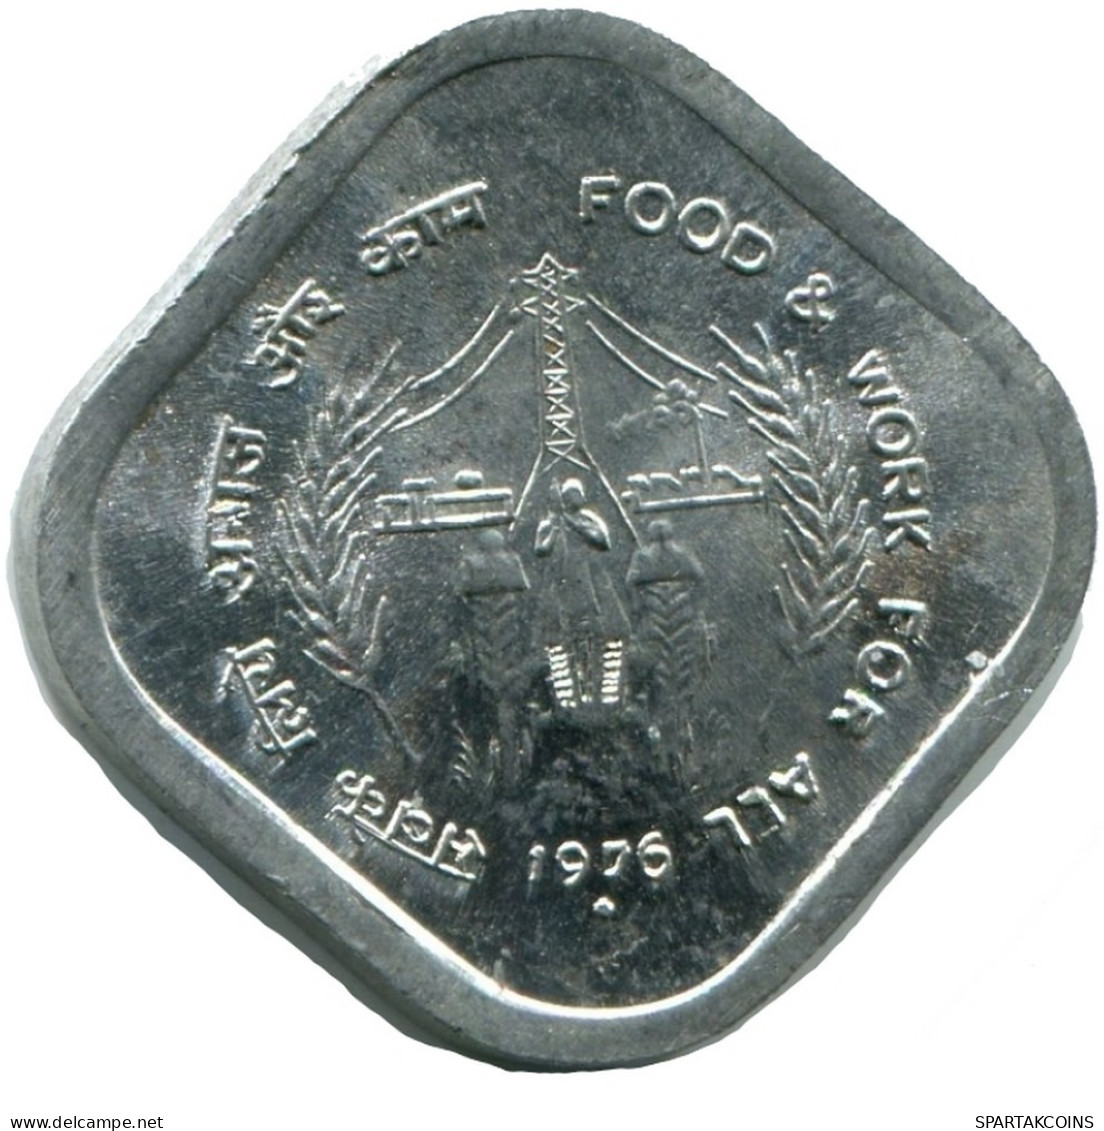 5 PAISE 1976 INDIA UNC Coin #M10362.U.A - Inde